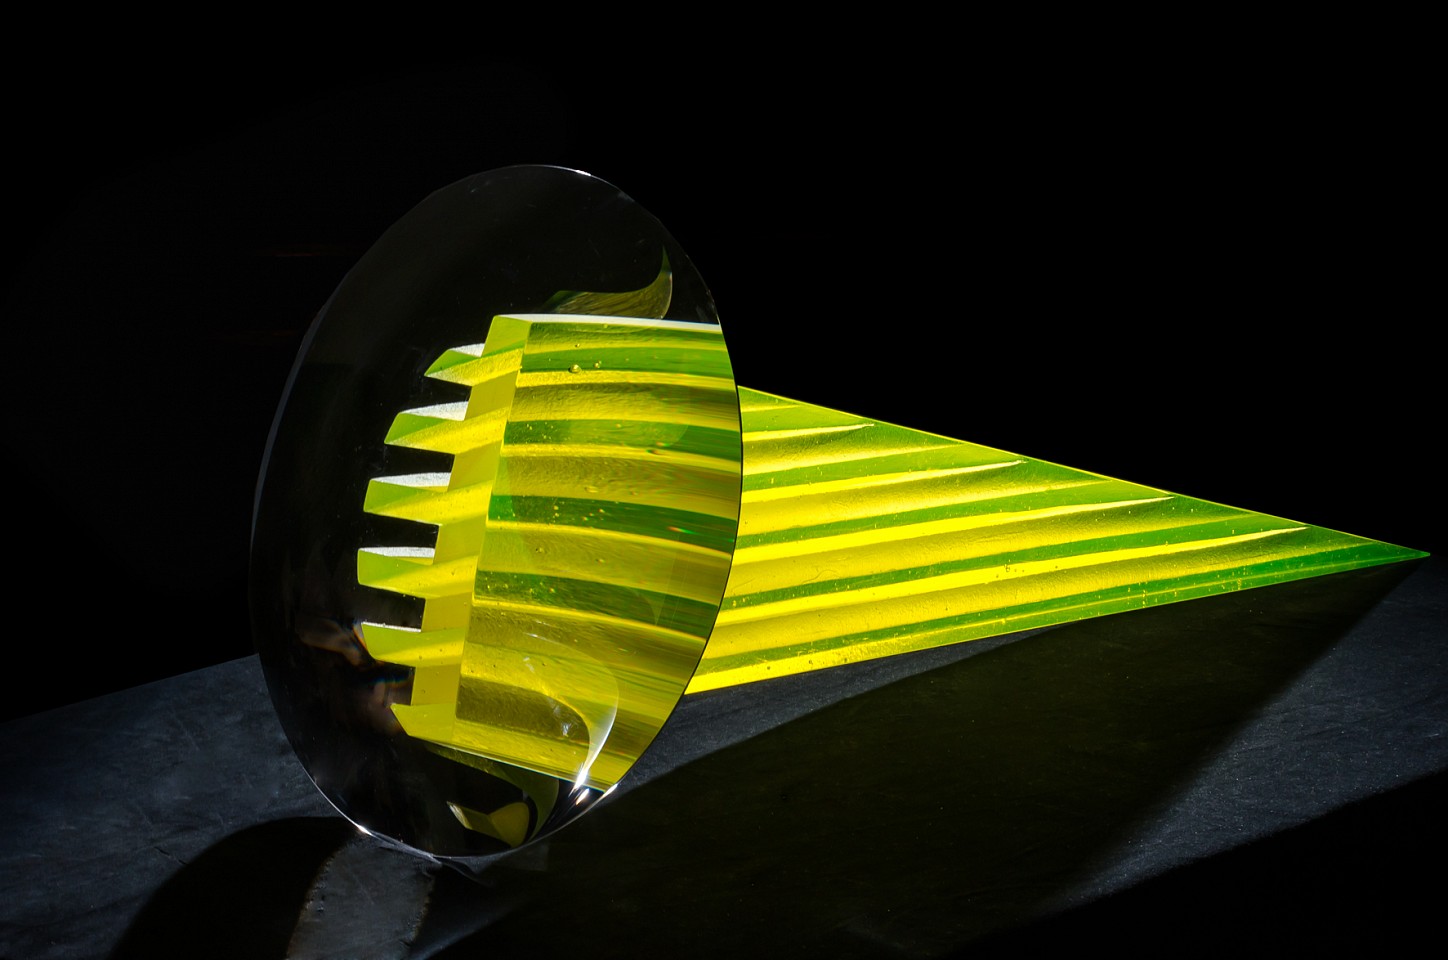 Stepan Pala, Curved Space
2014, Optical Glass